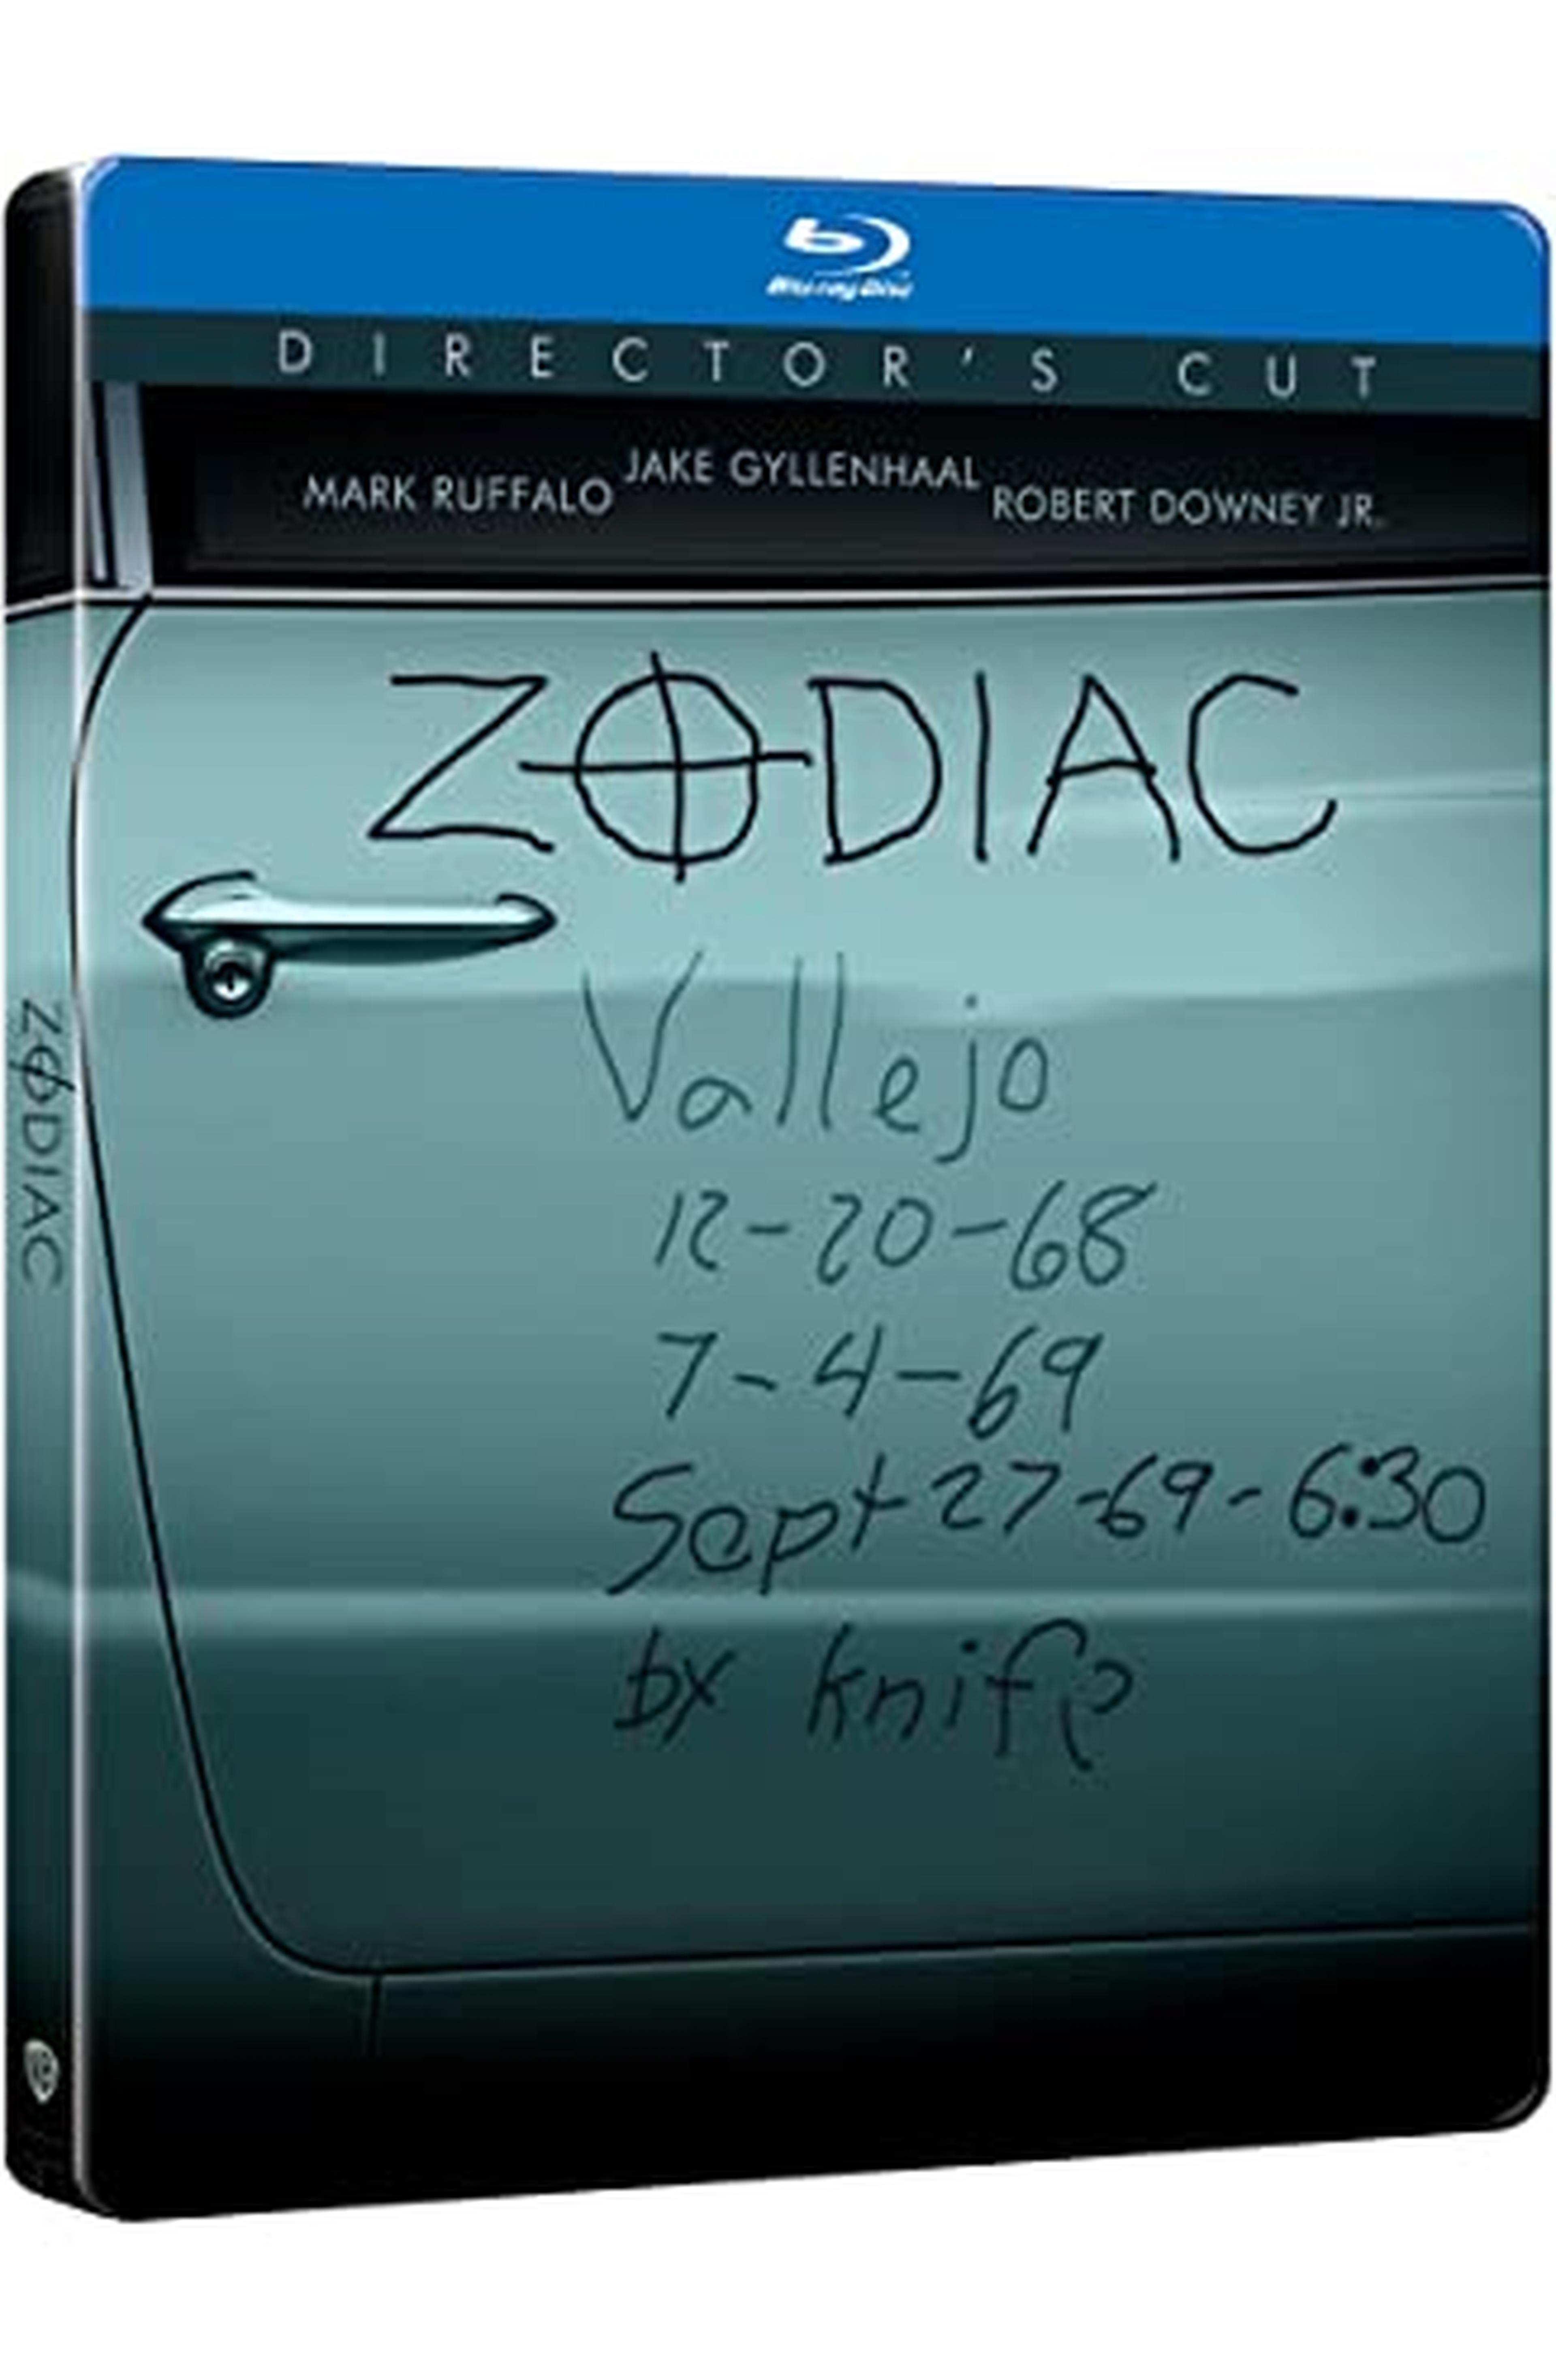 ZODIAC (2007) STEELBOOK (BS) - Esclusiva Amazon